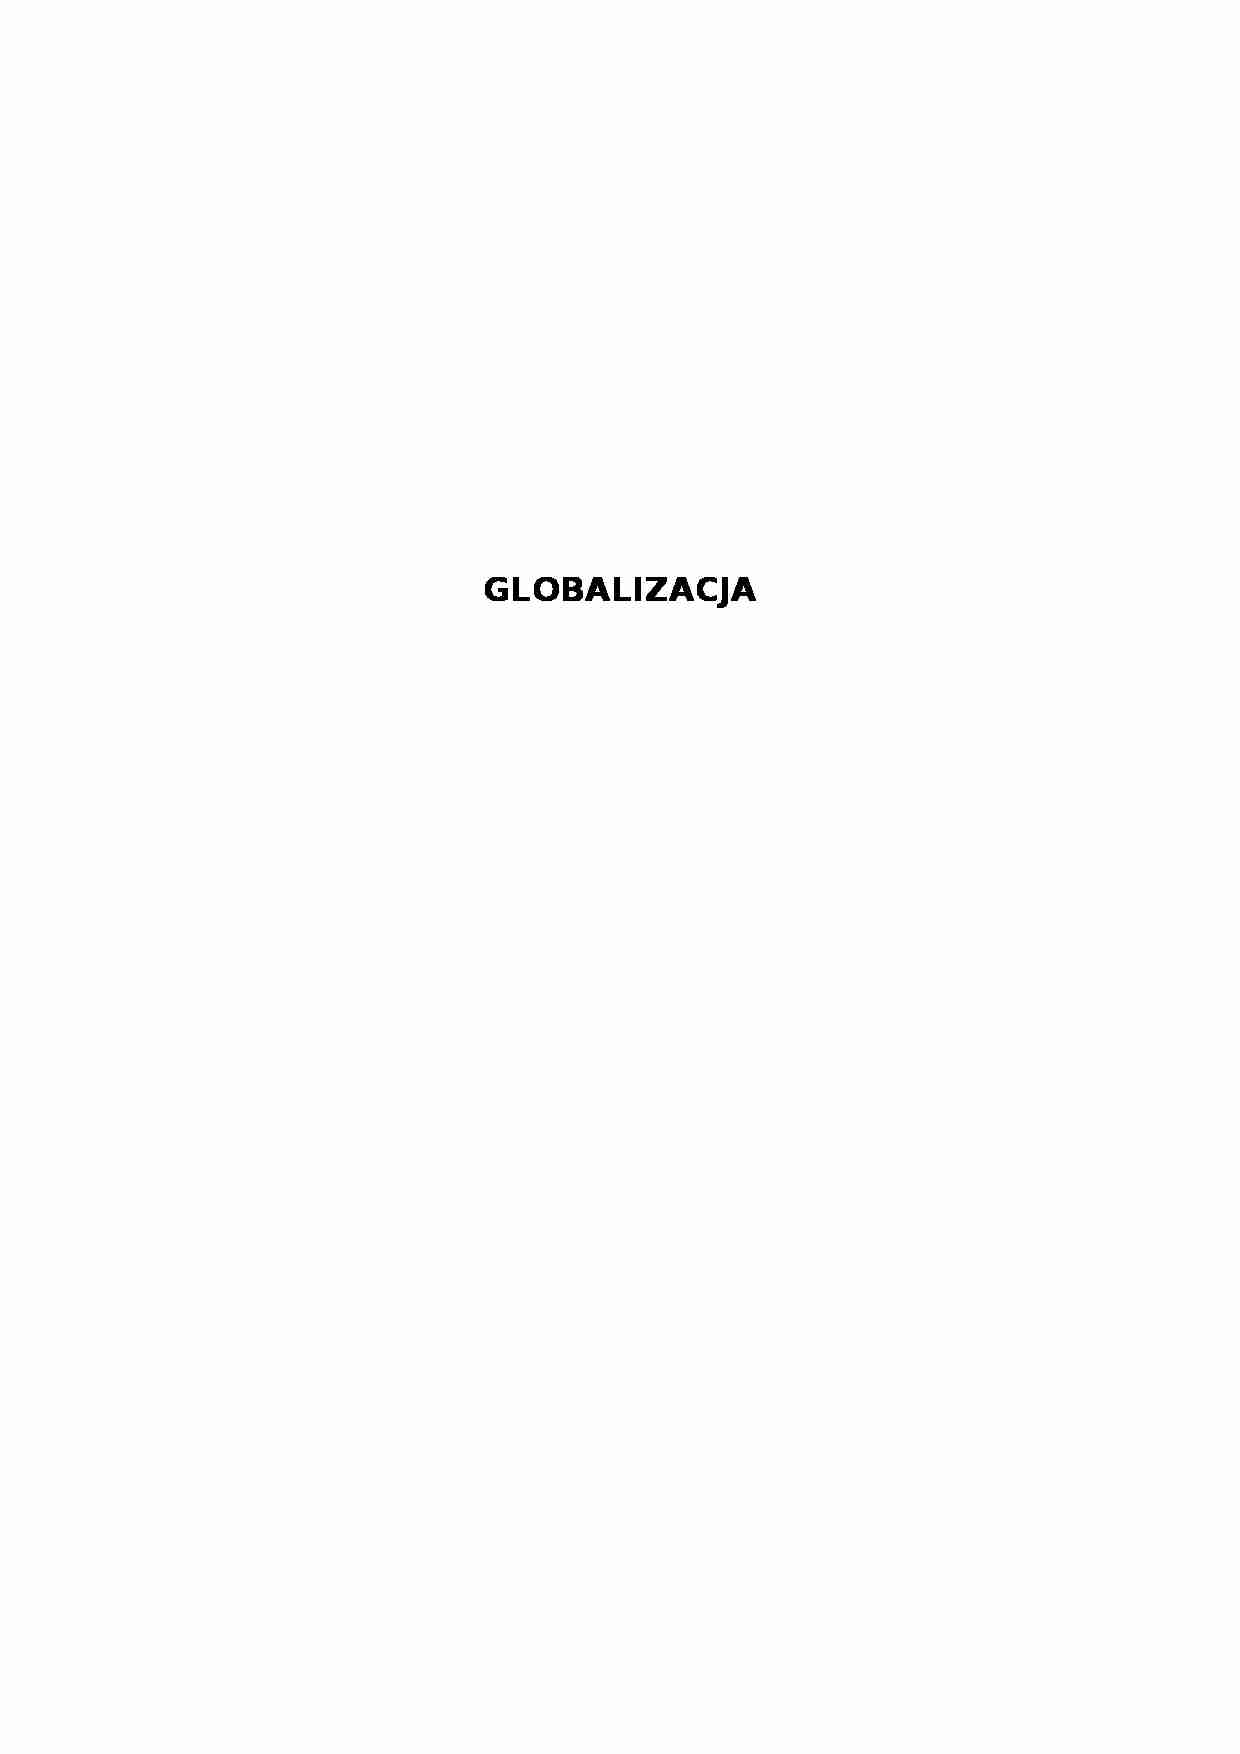 Globalizacja - grupa lizbońska - strona 1